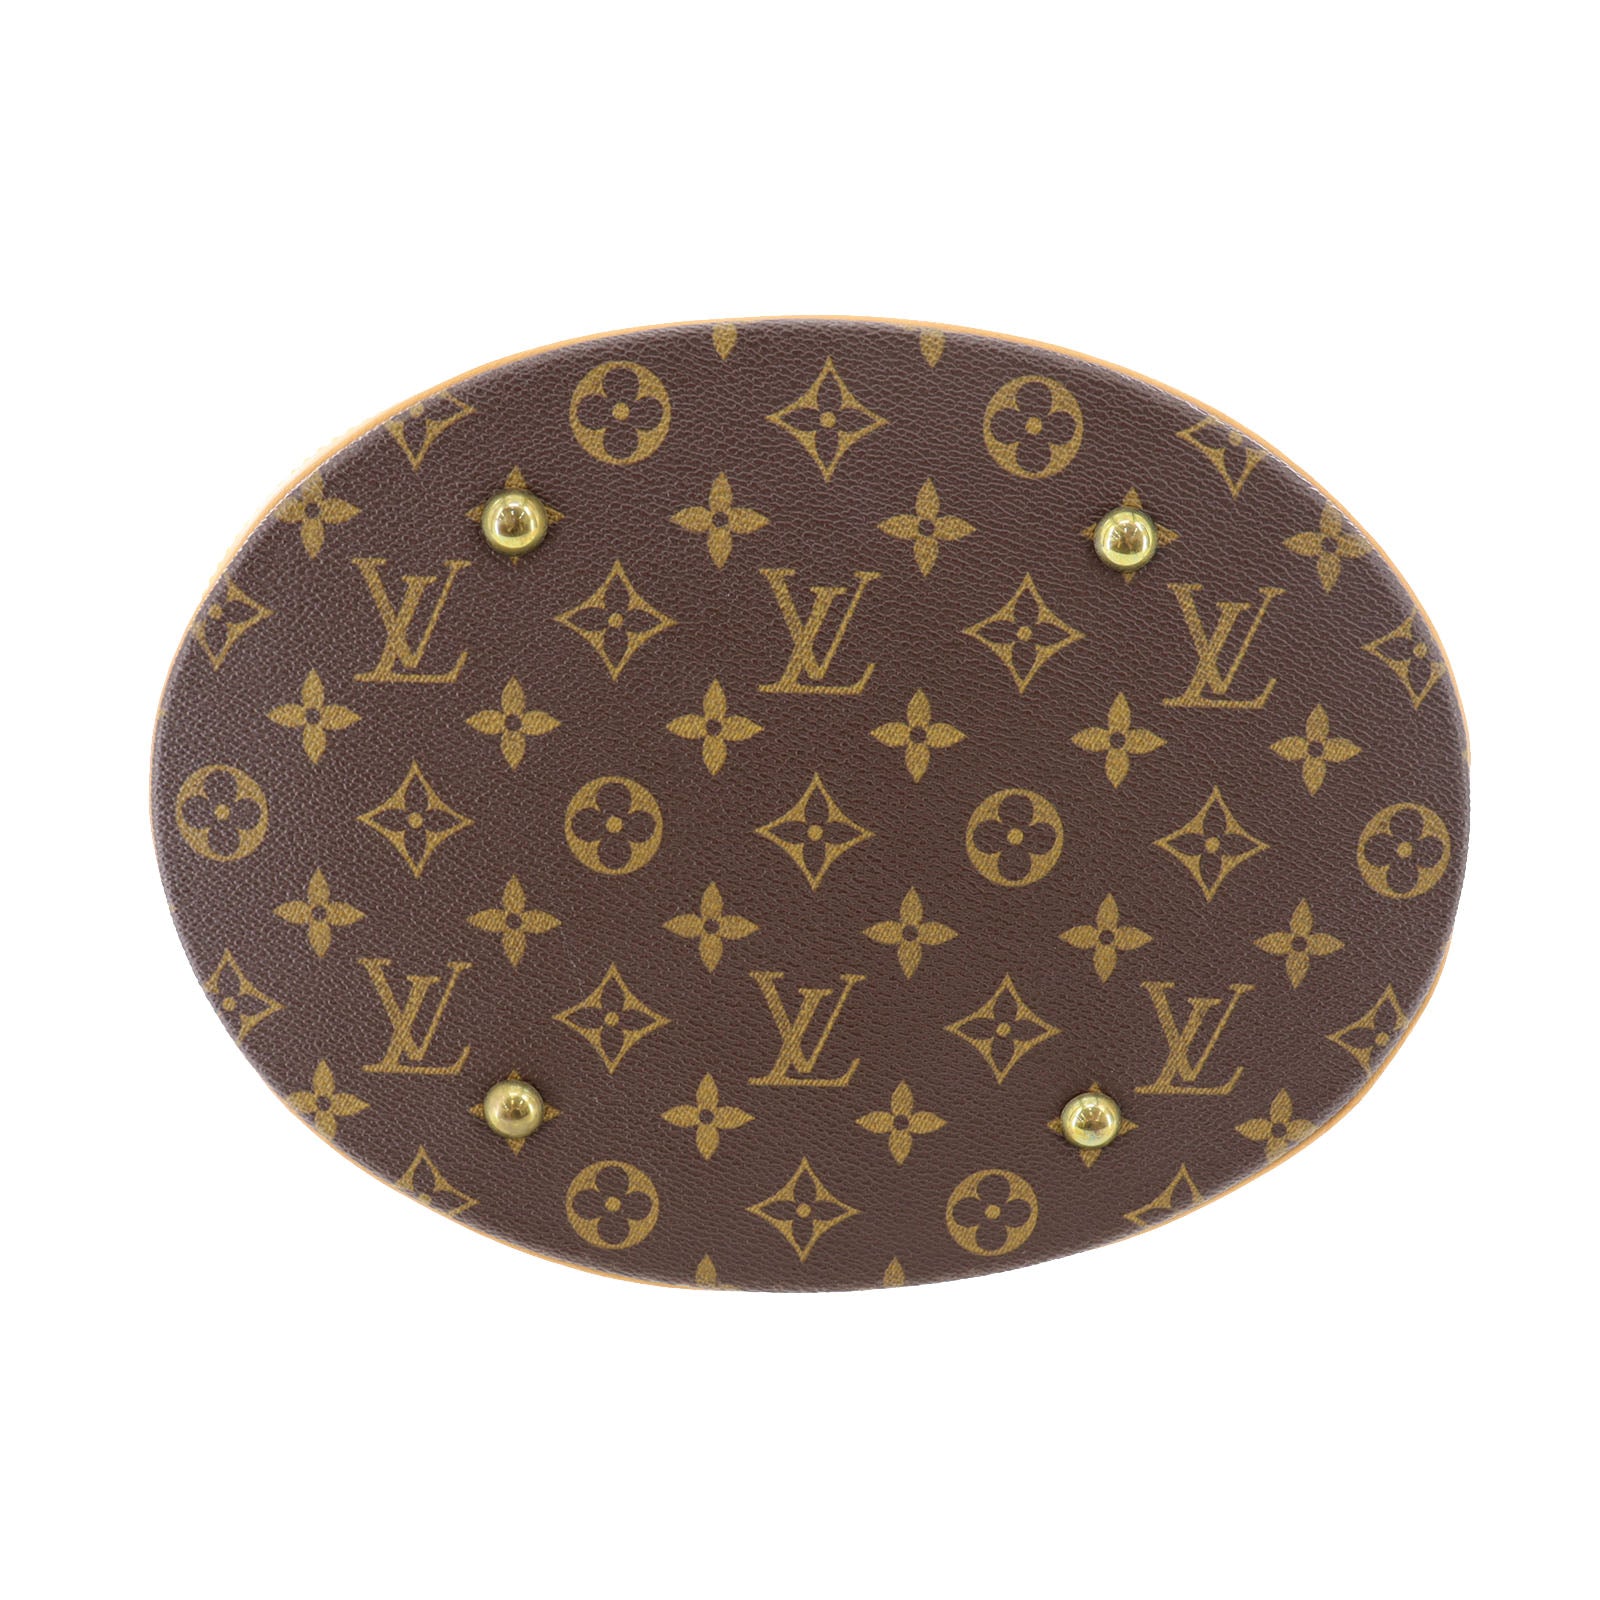 Auth Louis Vuitton Monogram Bucket GM Shoulder Bag M42236 Used